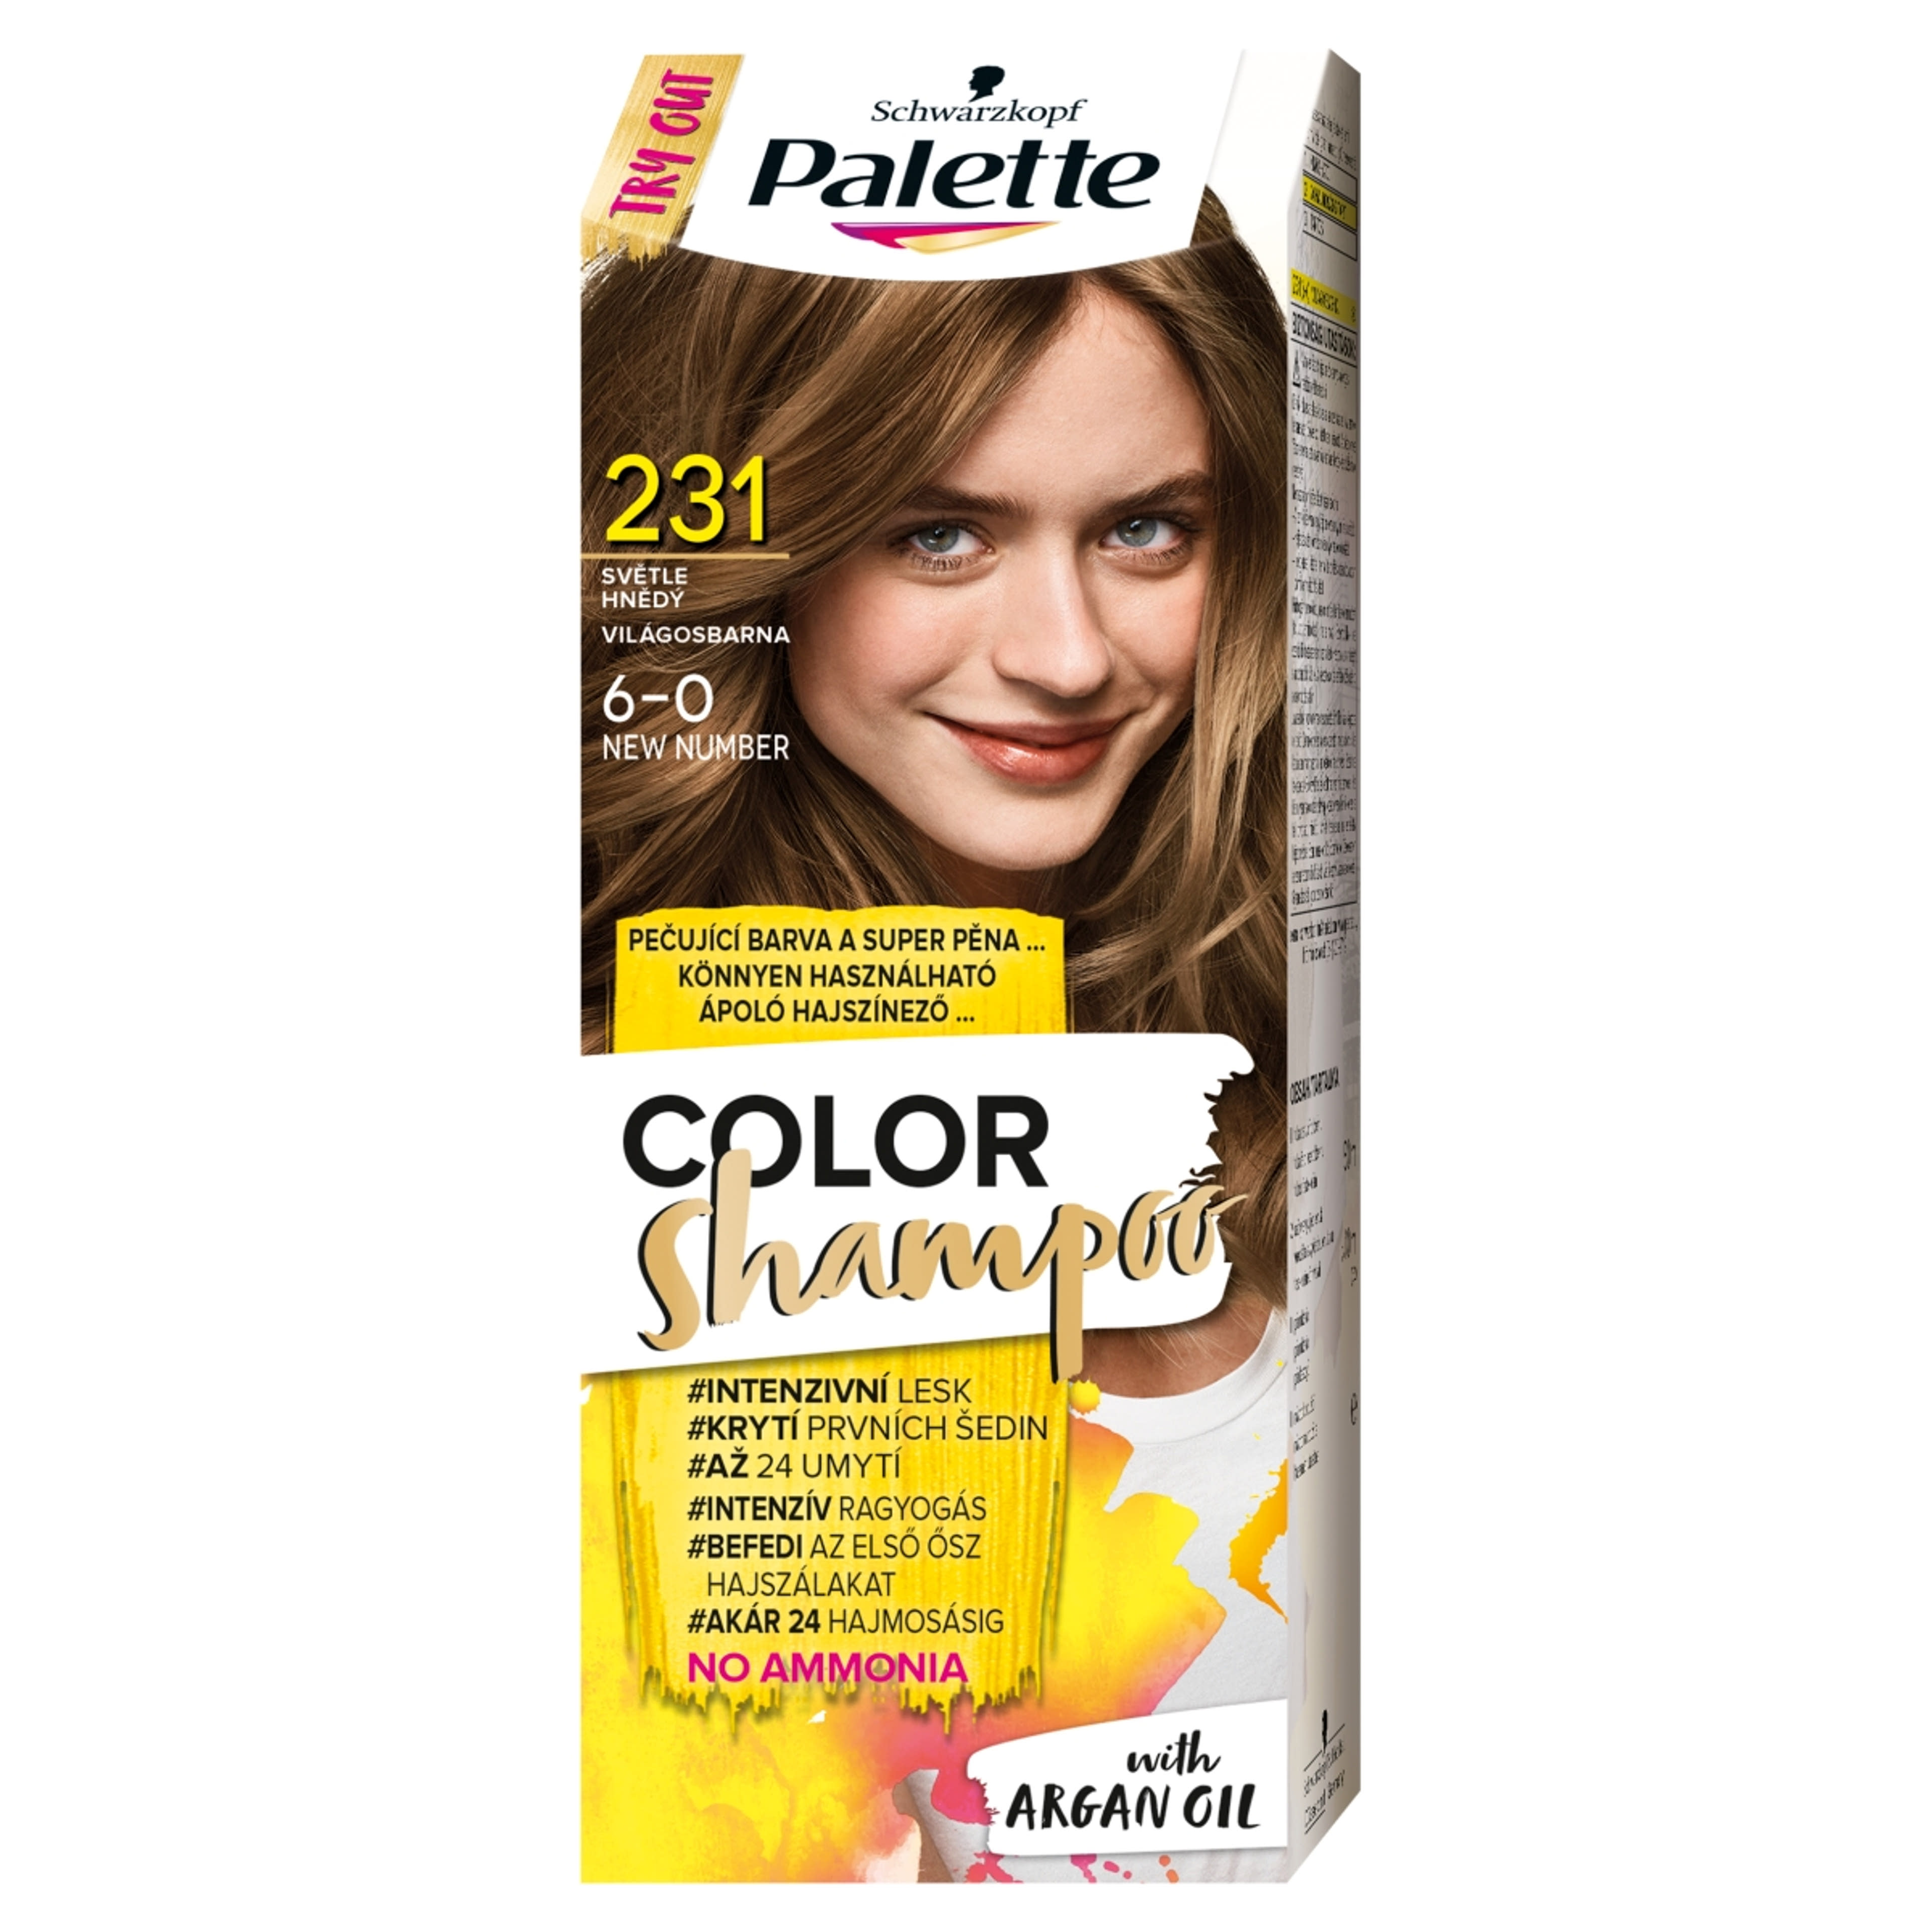 Schwarzkopf Palette Color Shampoo hajfesték 231 világosbarna - 1 db